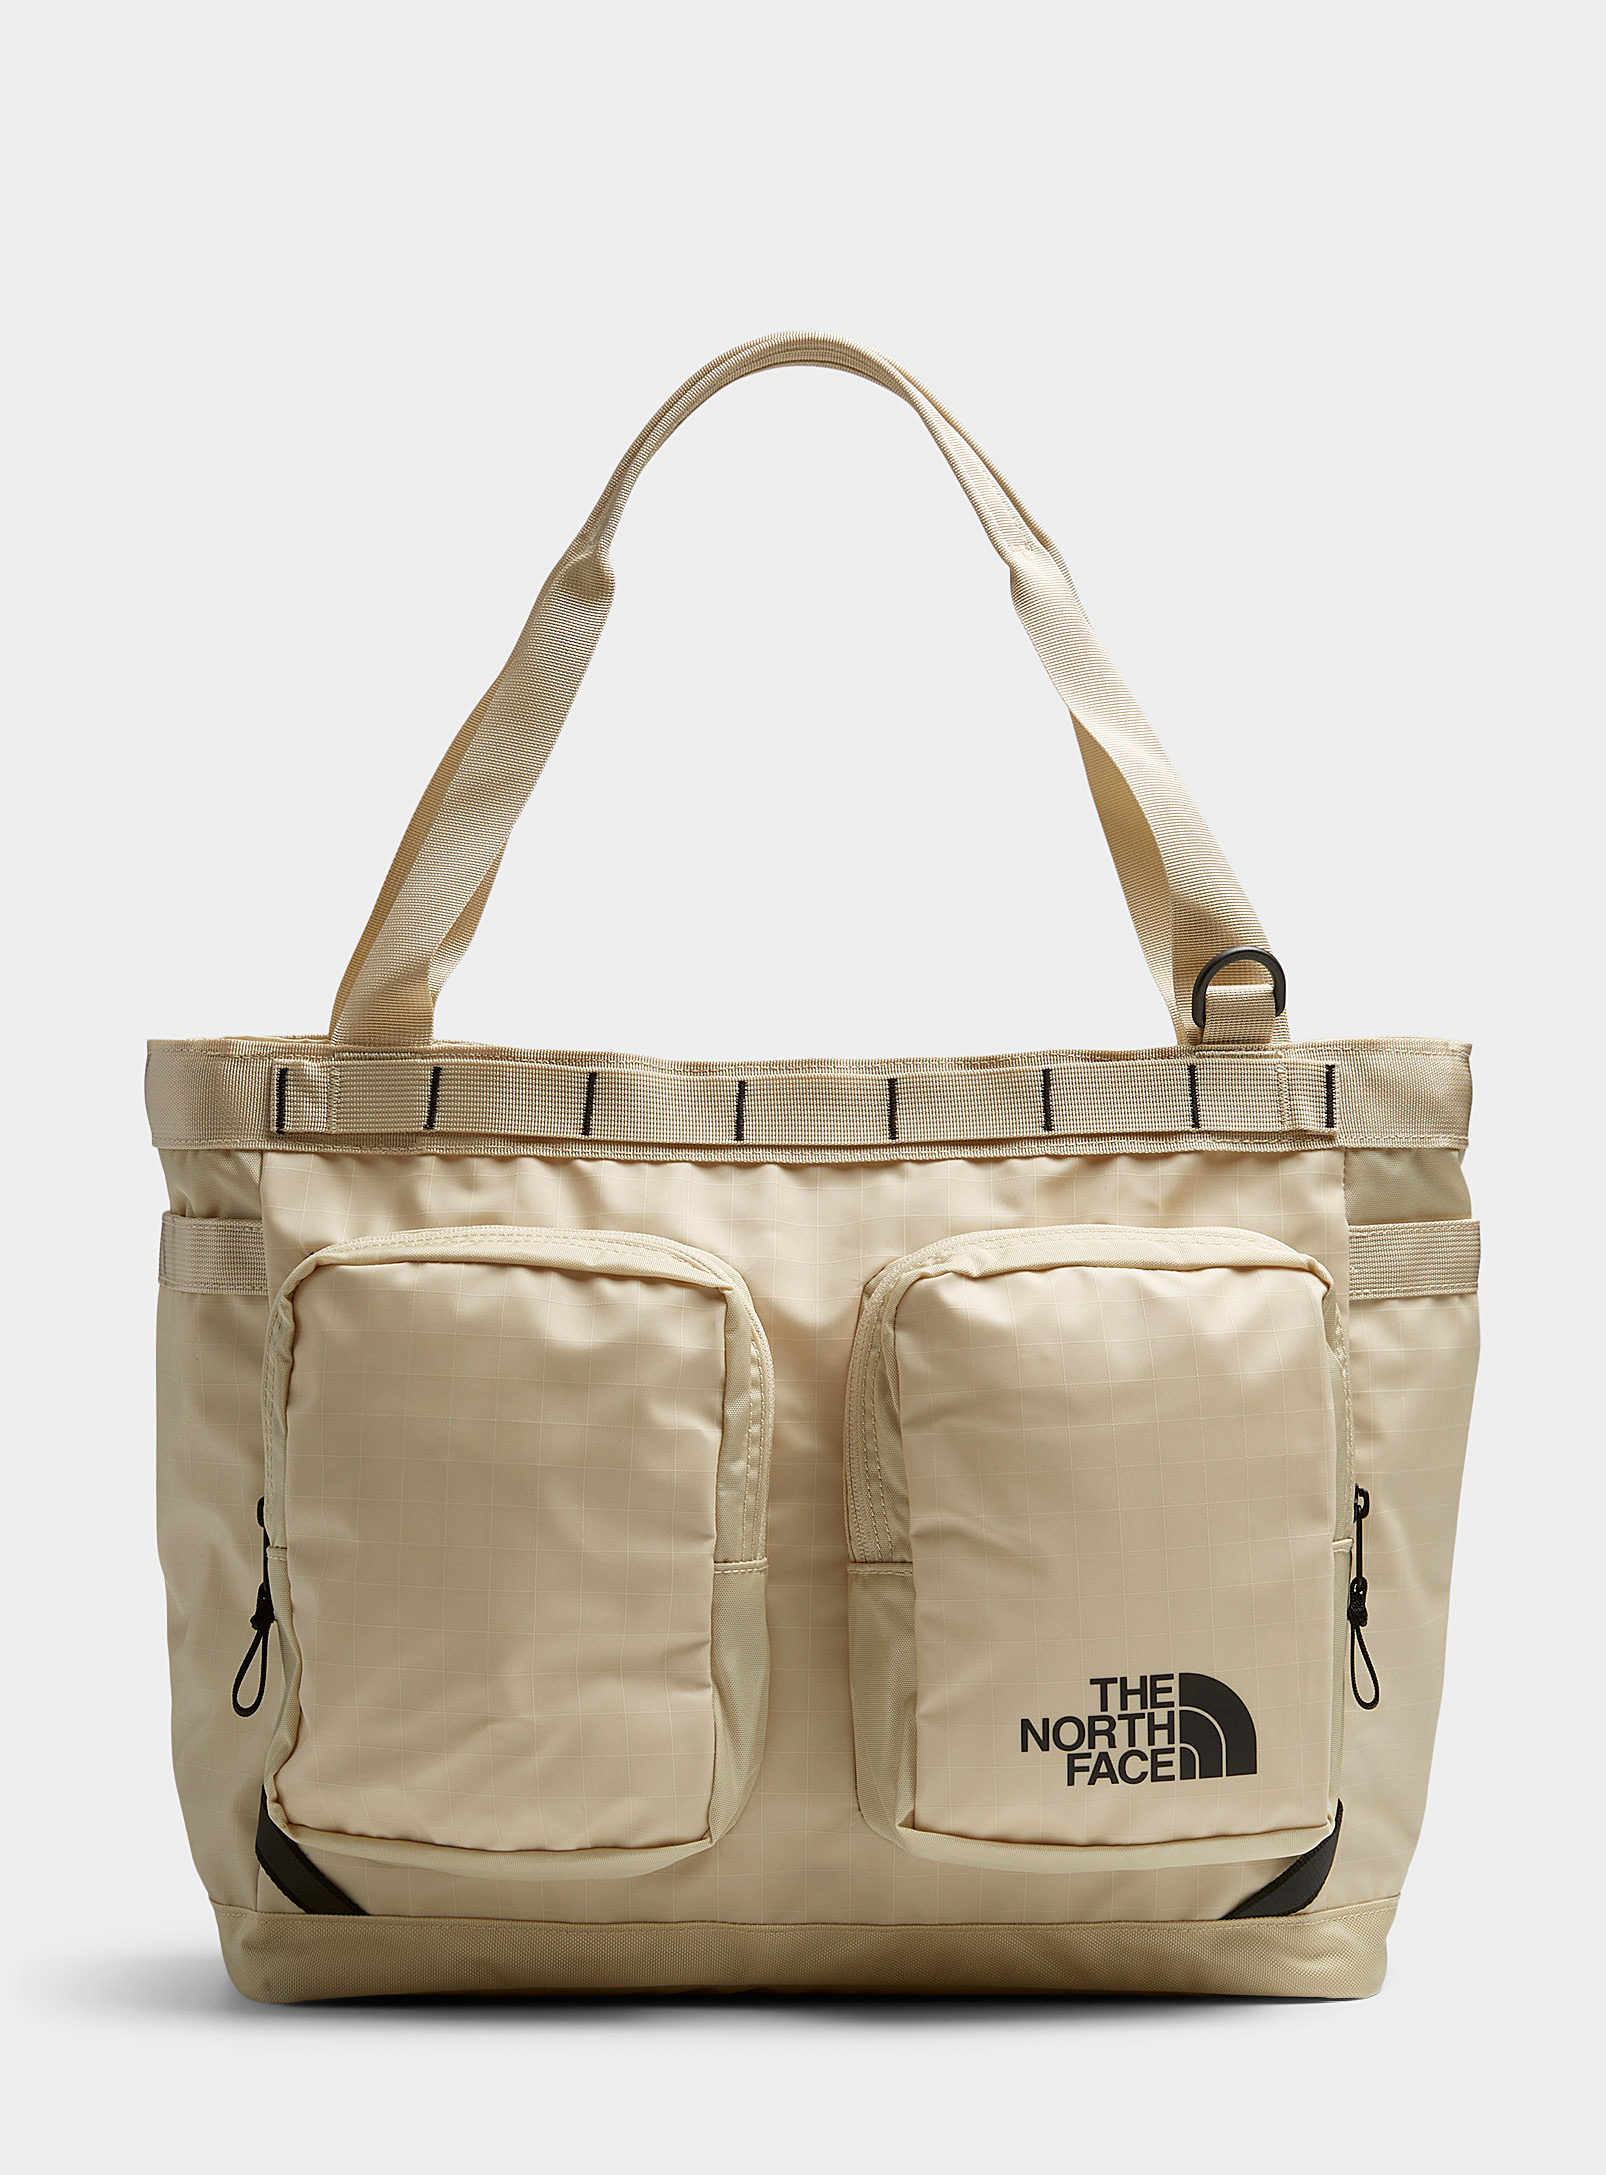 The North Face - Men's Base Camp Voyager tote bag